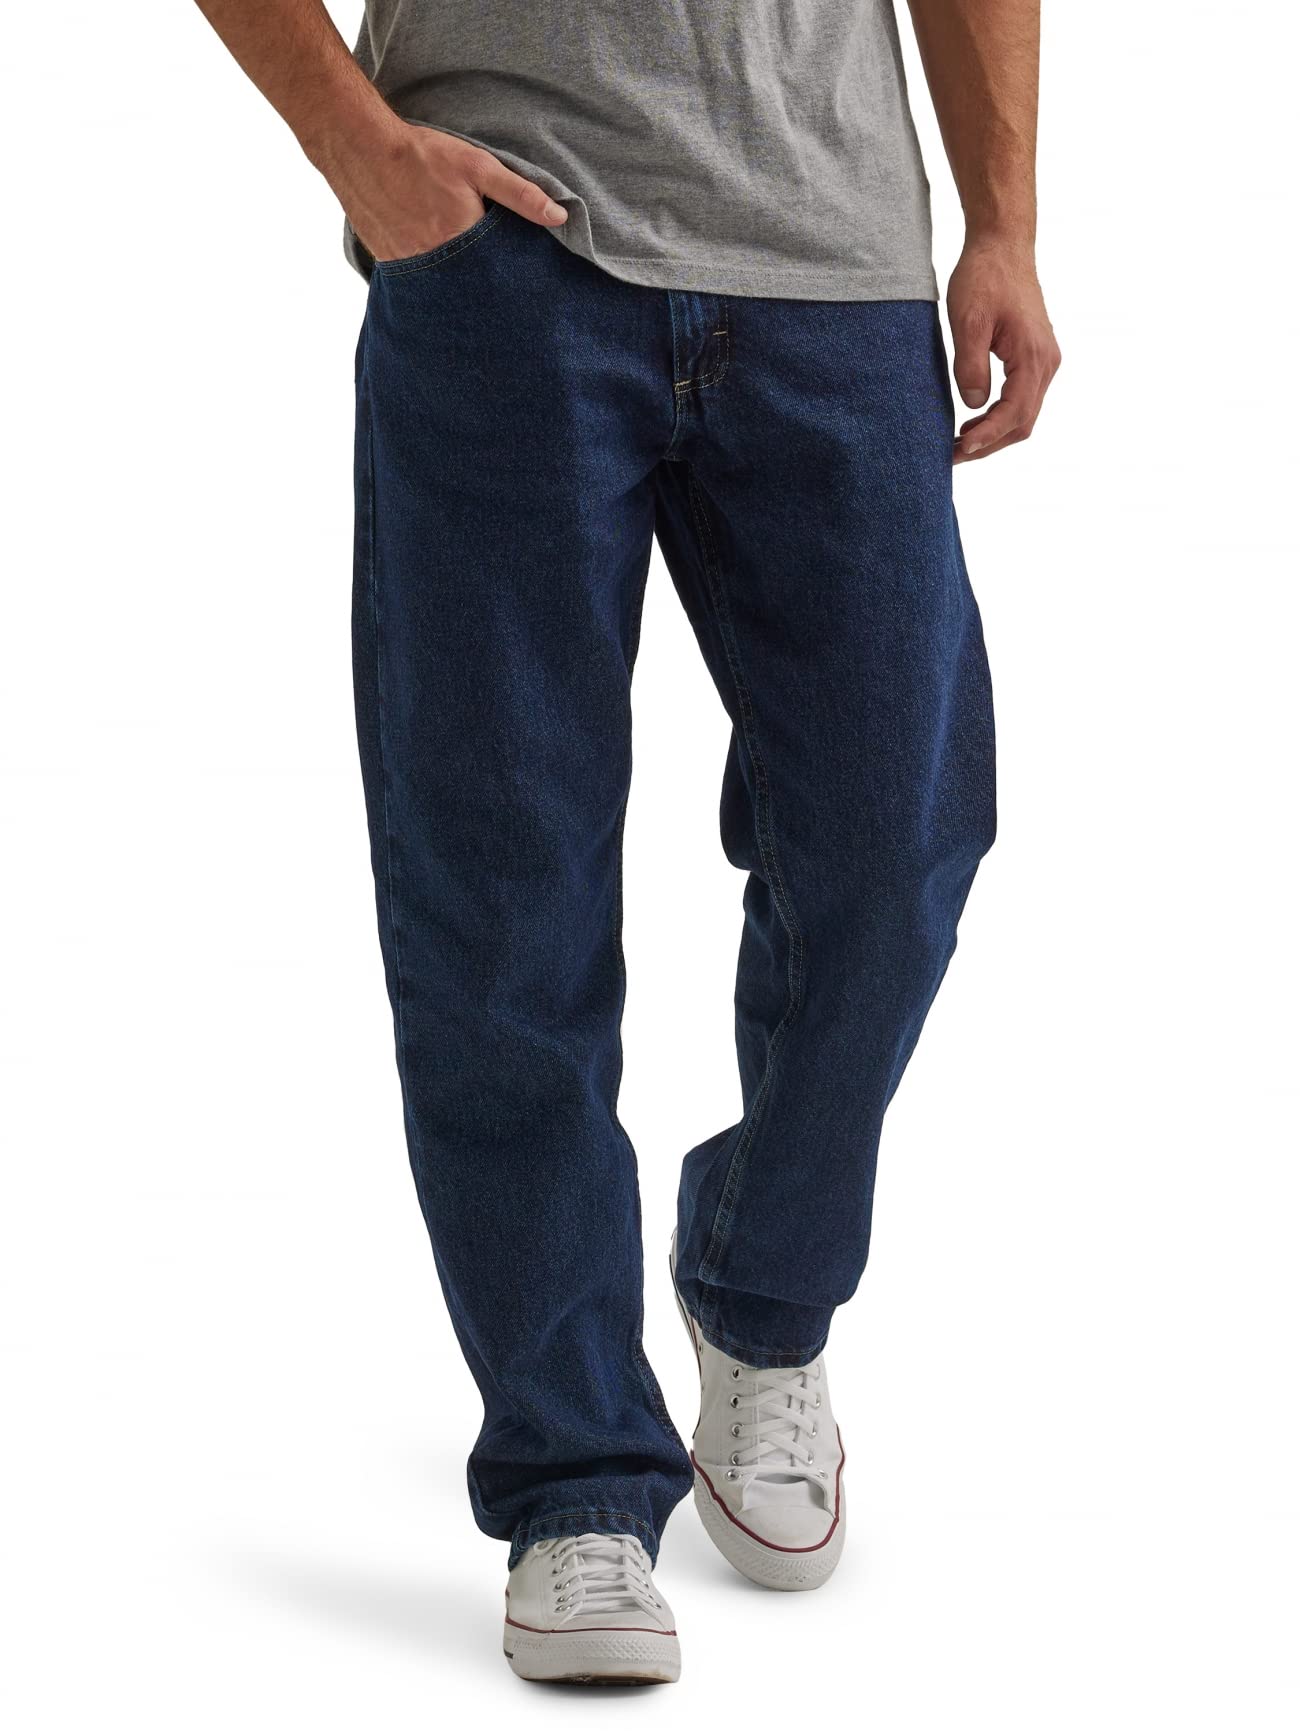 Wrangler Authentics Men's Classic 5-Pocket Relaxed Fit Cotton Jean, Dark Rinse, 38W X 32L